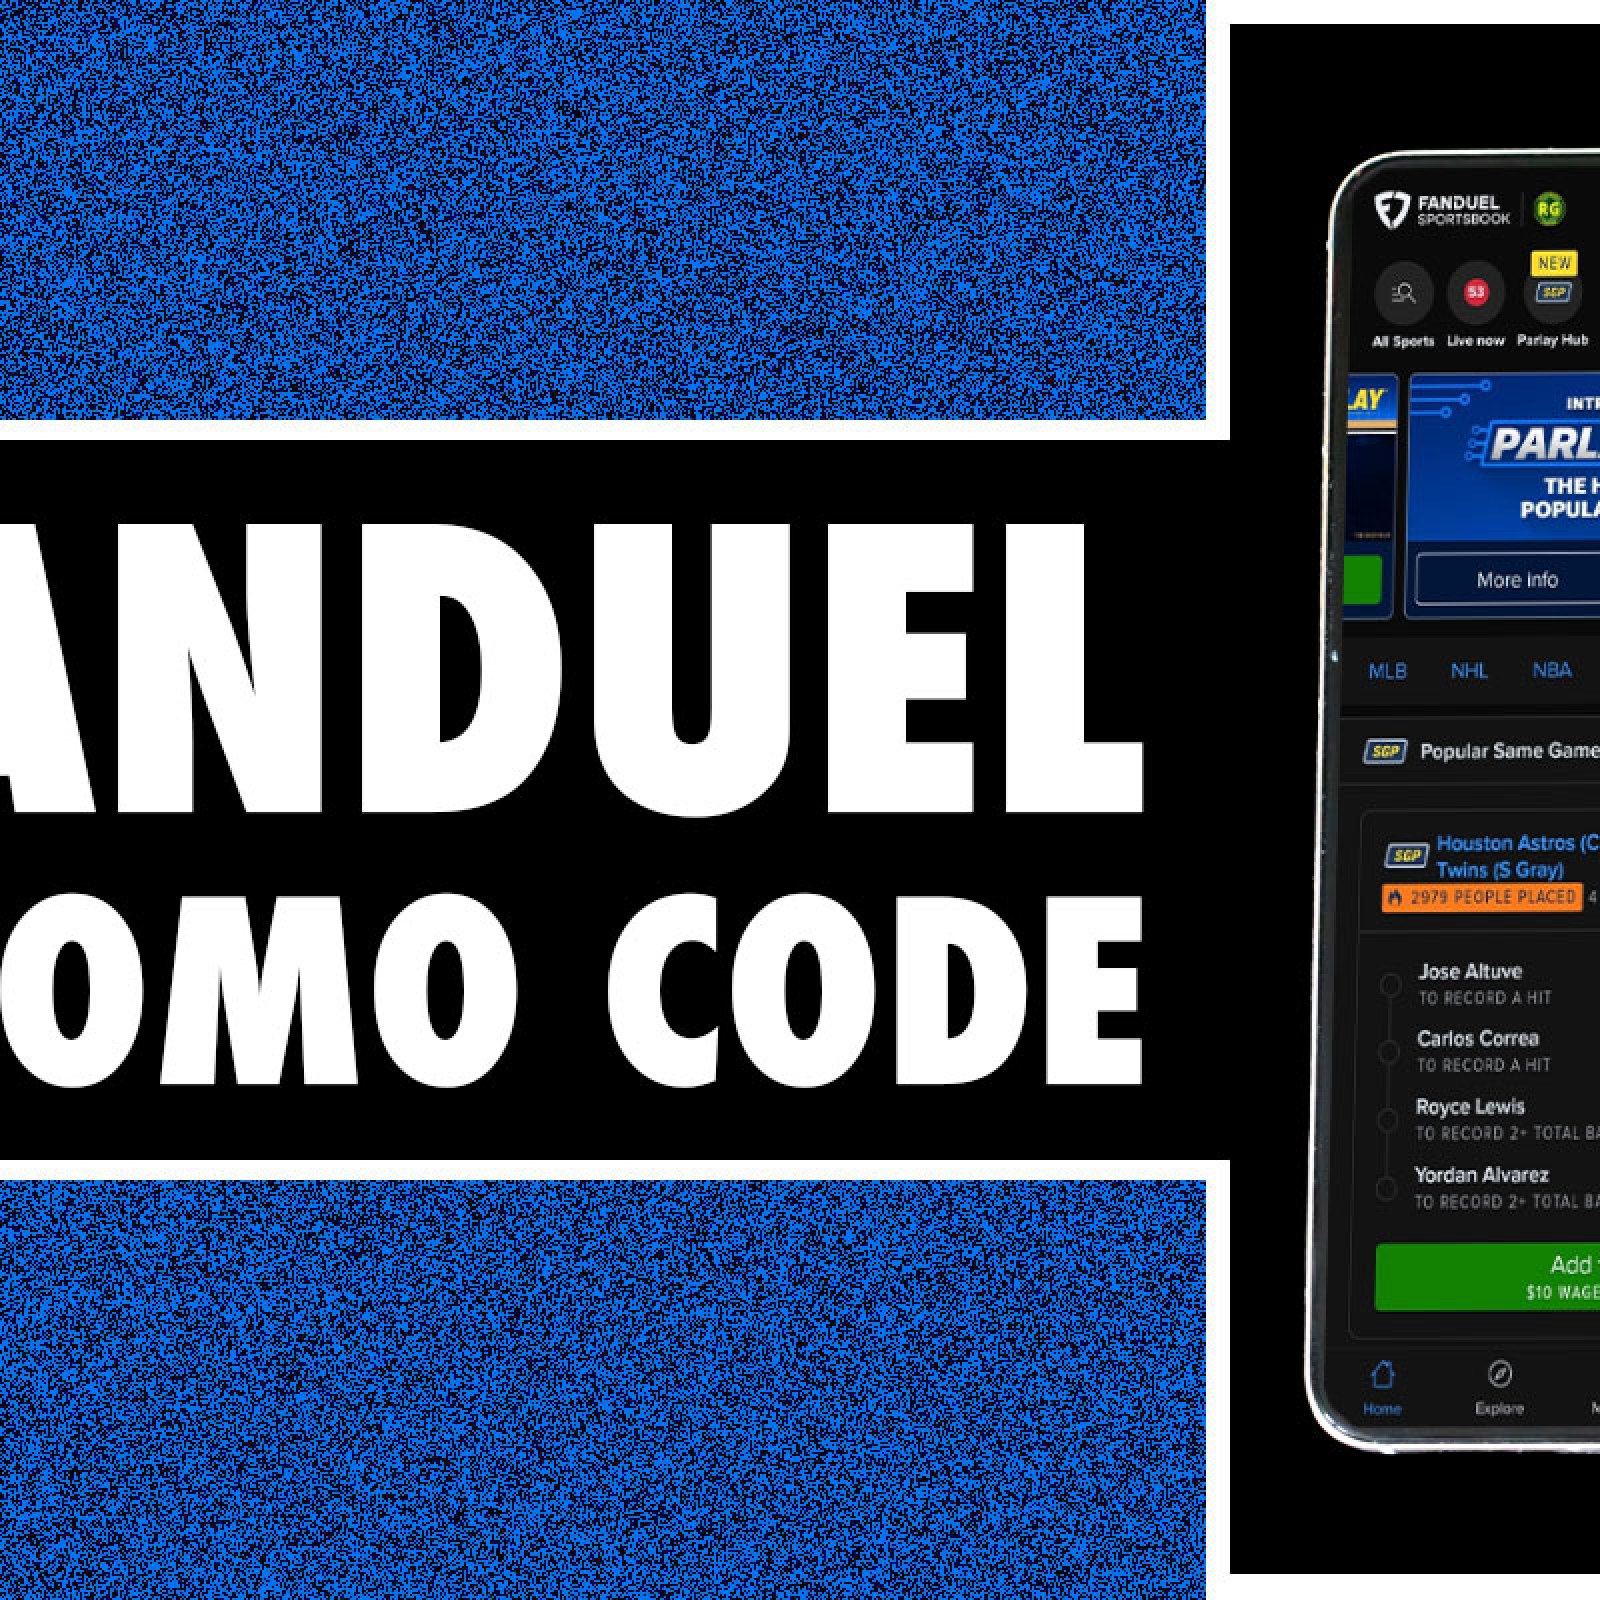 Fanduel Promo Code For Nfl Sunday Bet